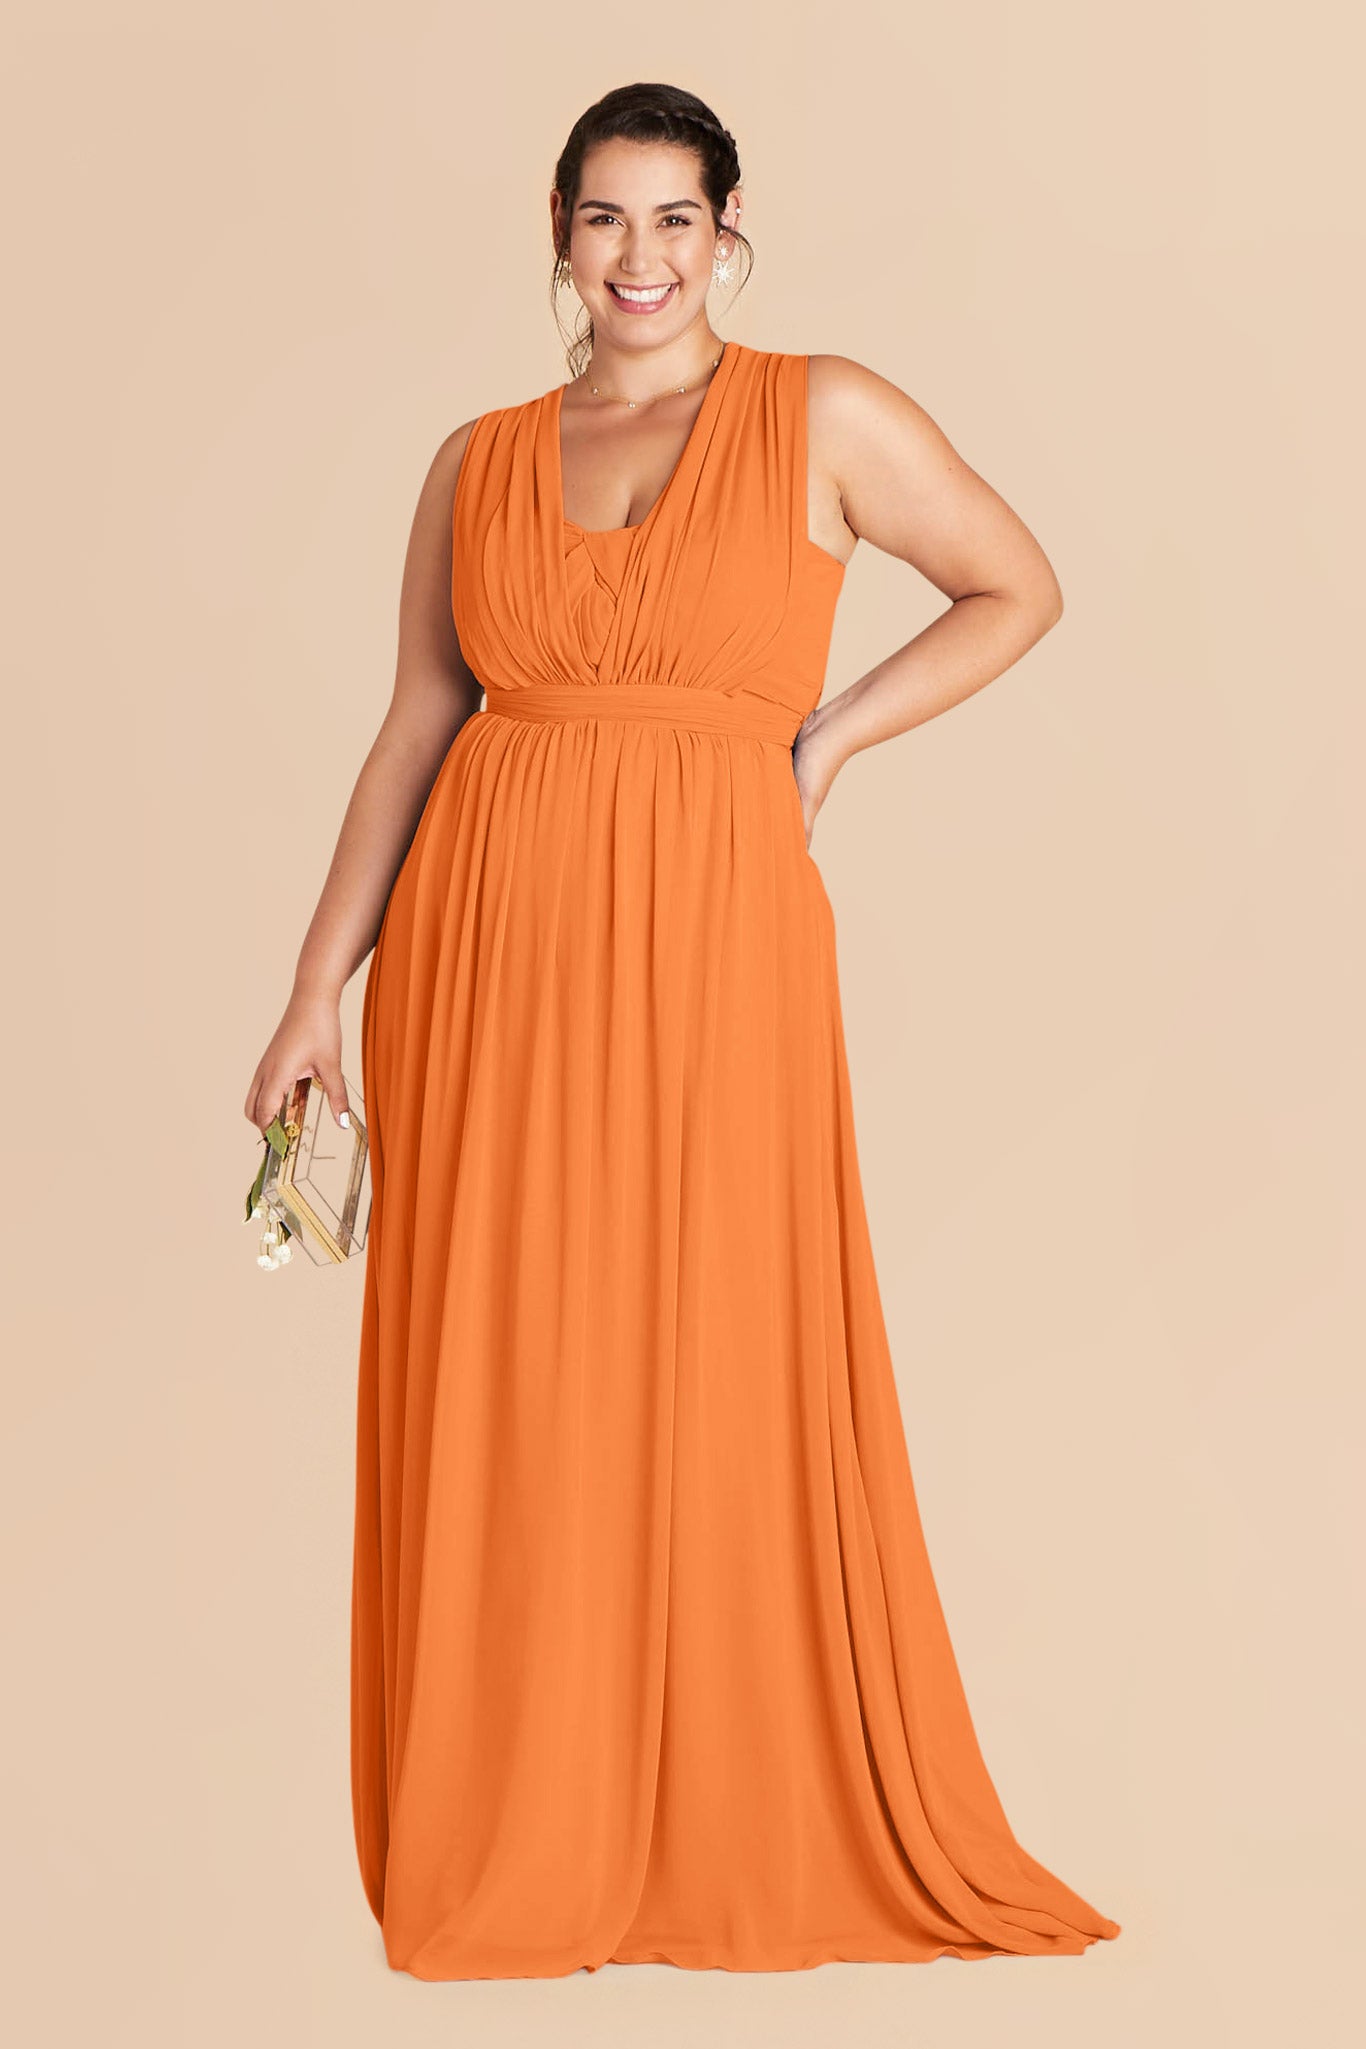 Apricot Grace Convertible Dress by Birdy Grey